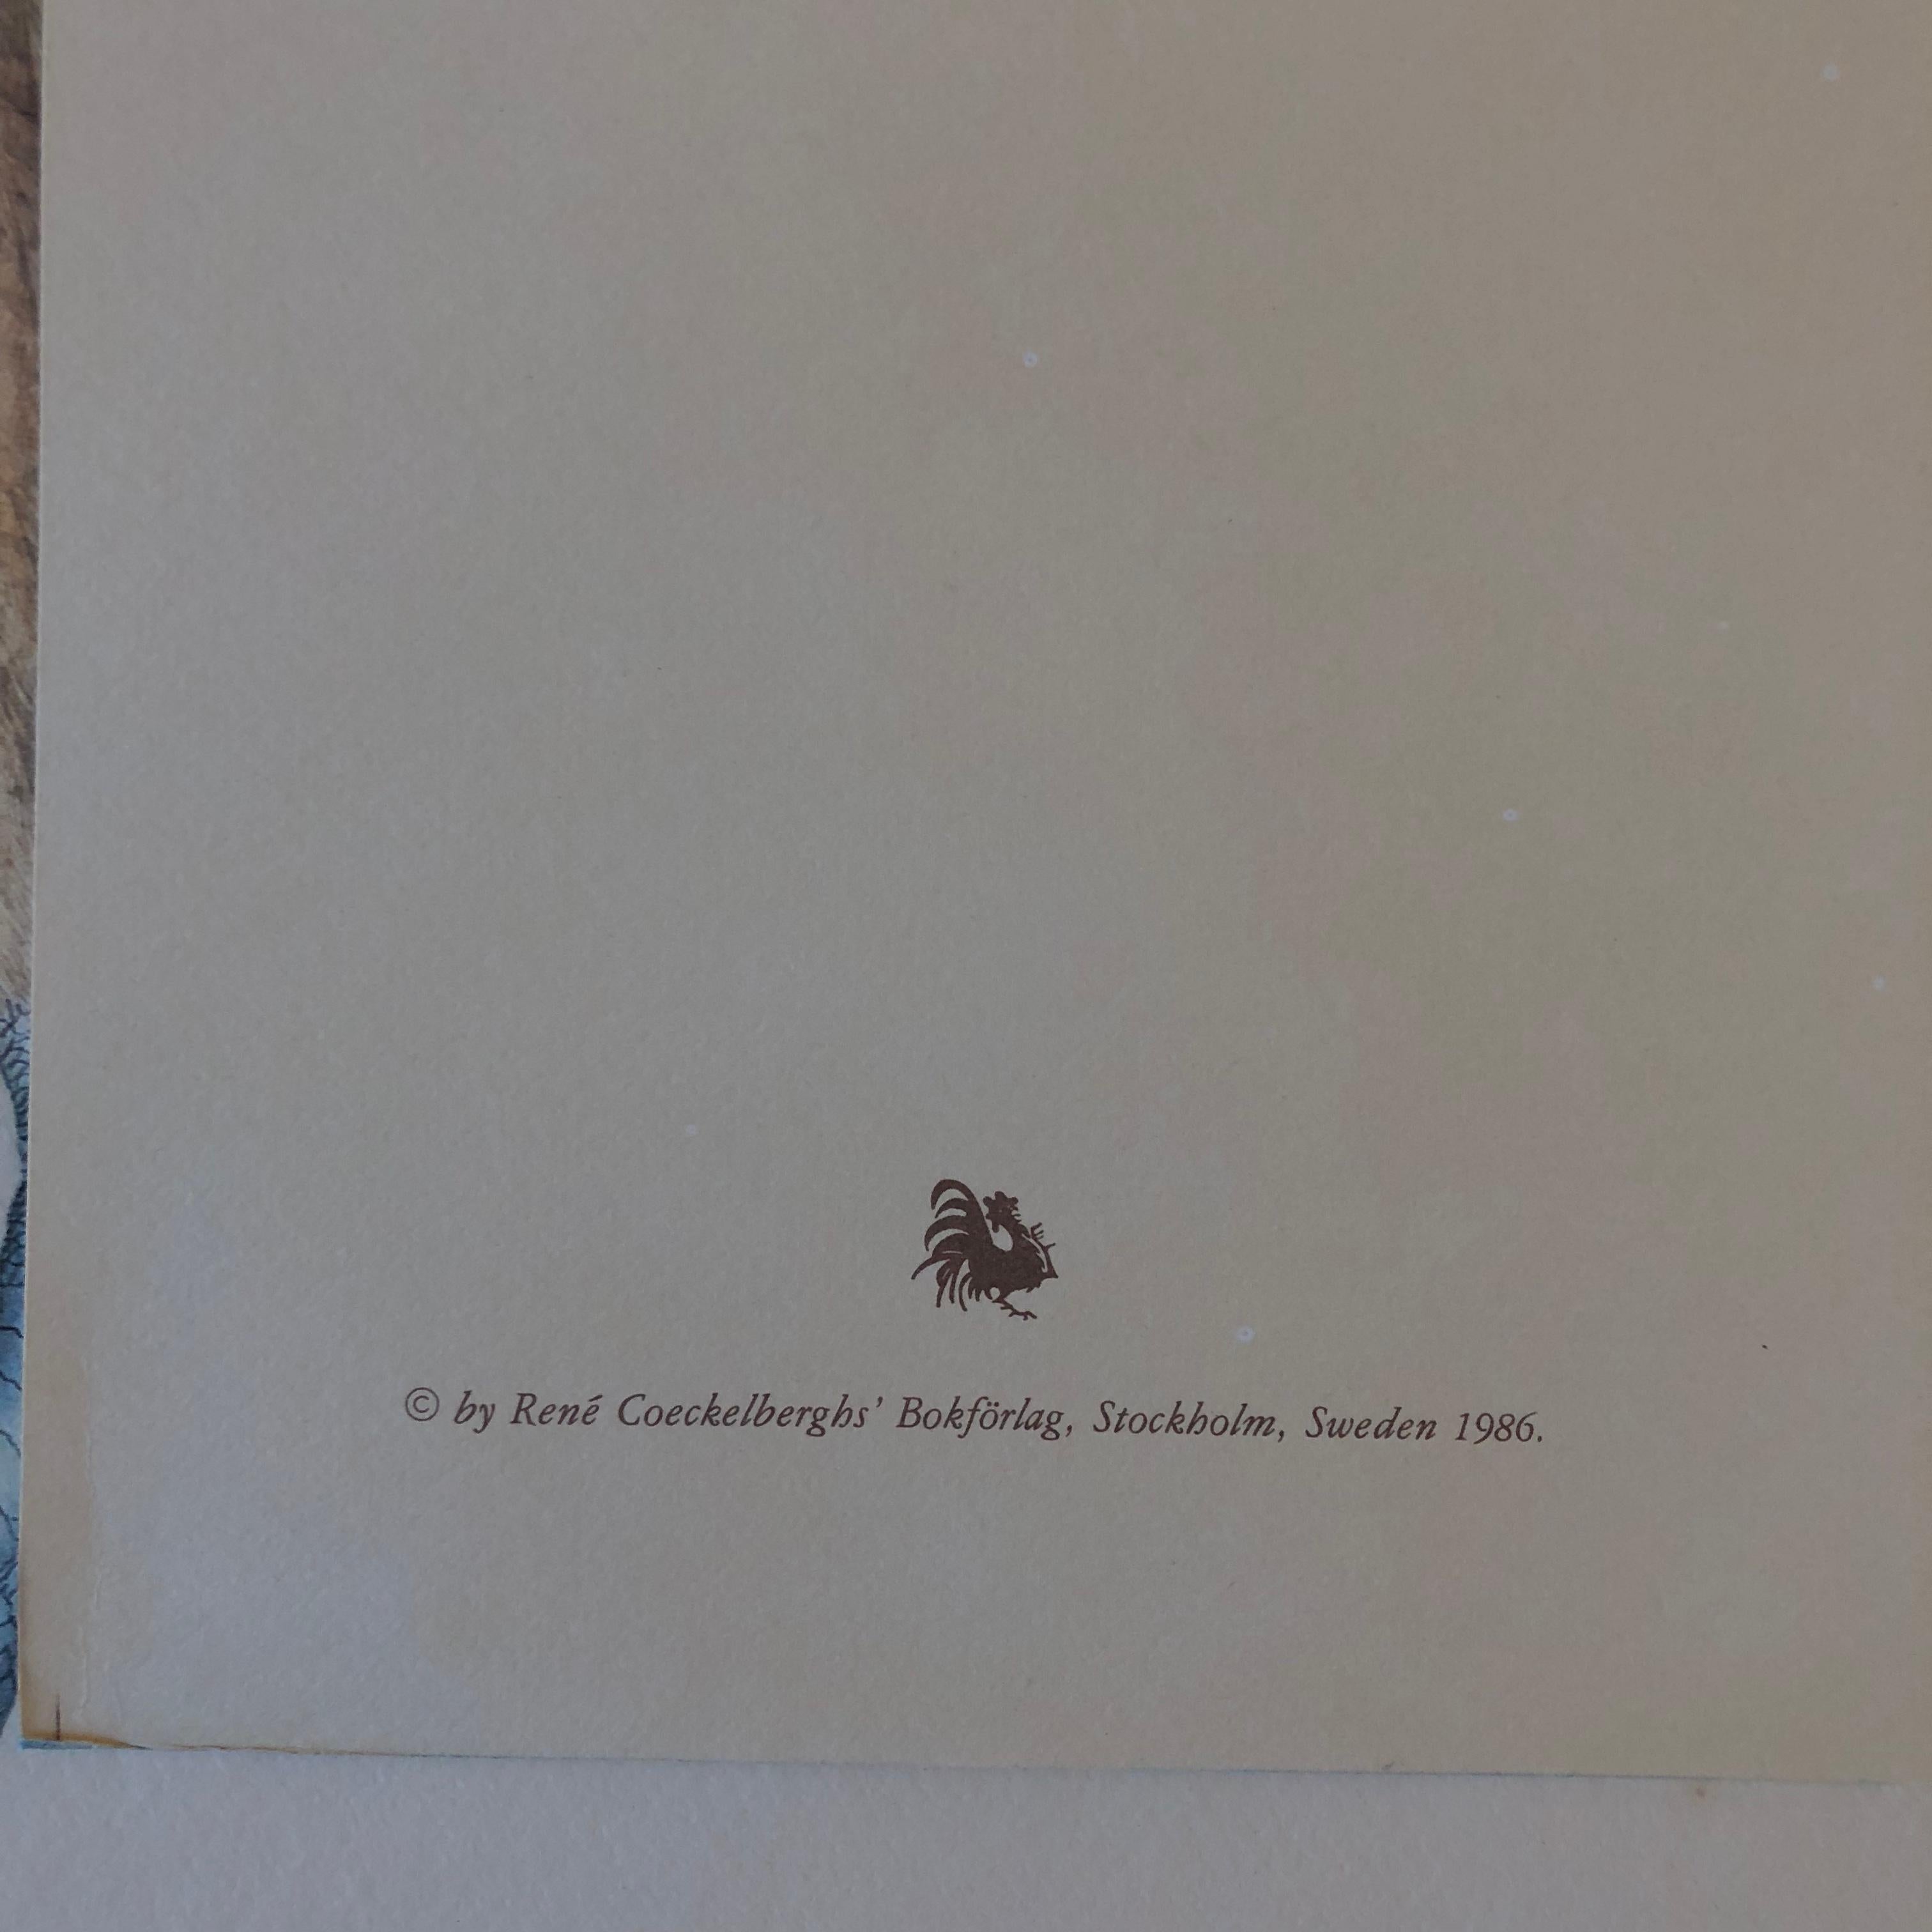 Olof Rudbeck DY - Original Swan unframed print. Limited First Edition Portfolio - #482 of 1499 portfolios. Published in 1986 by Swedish publisher. 30.75